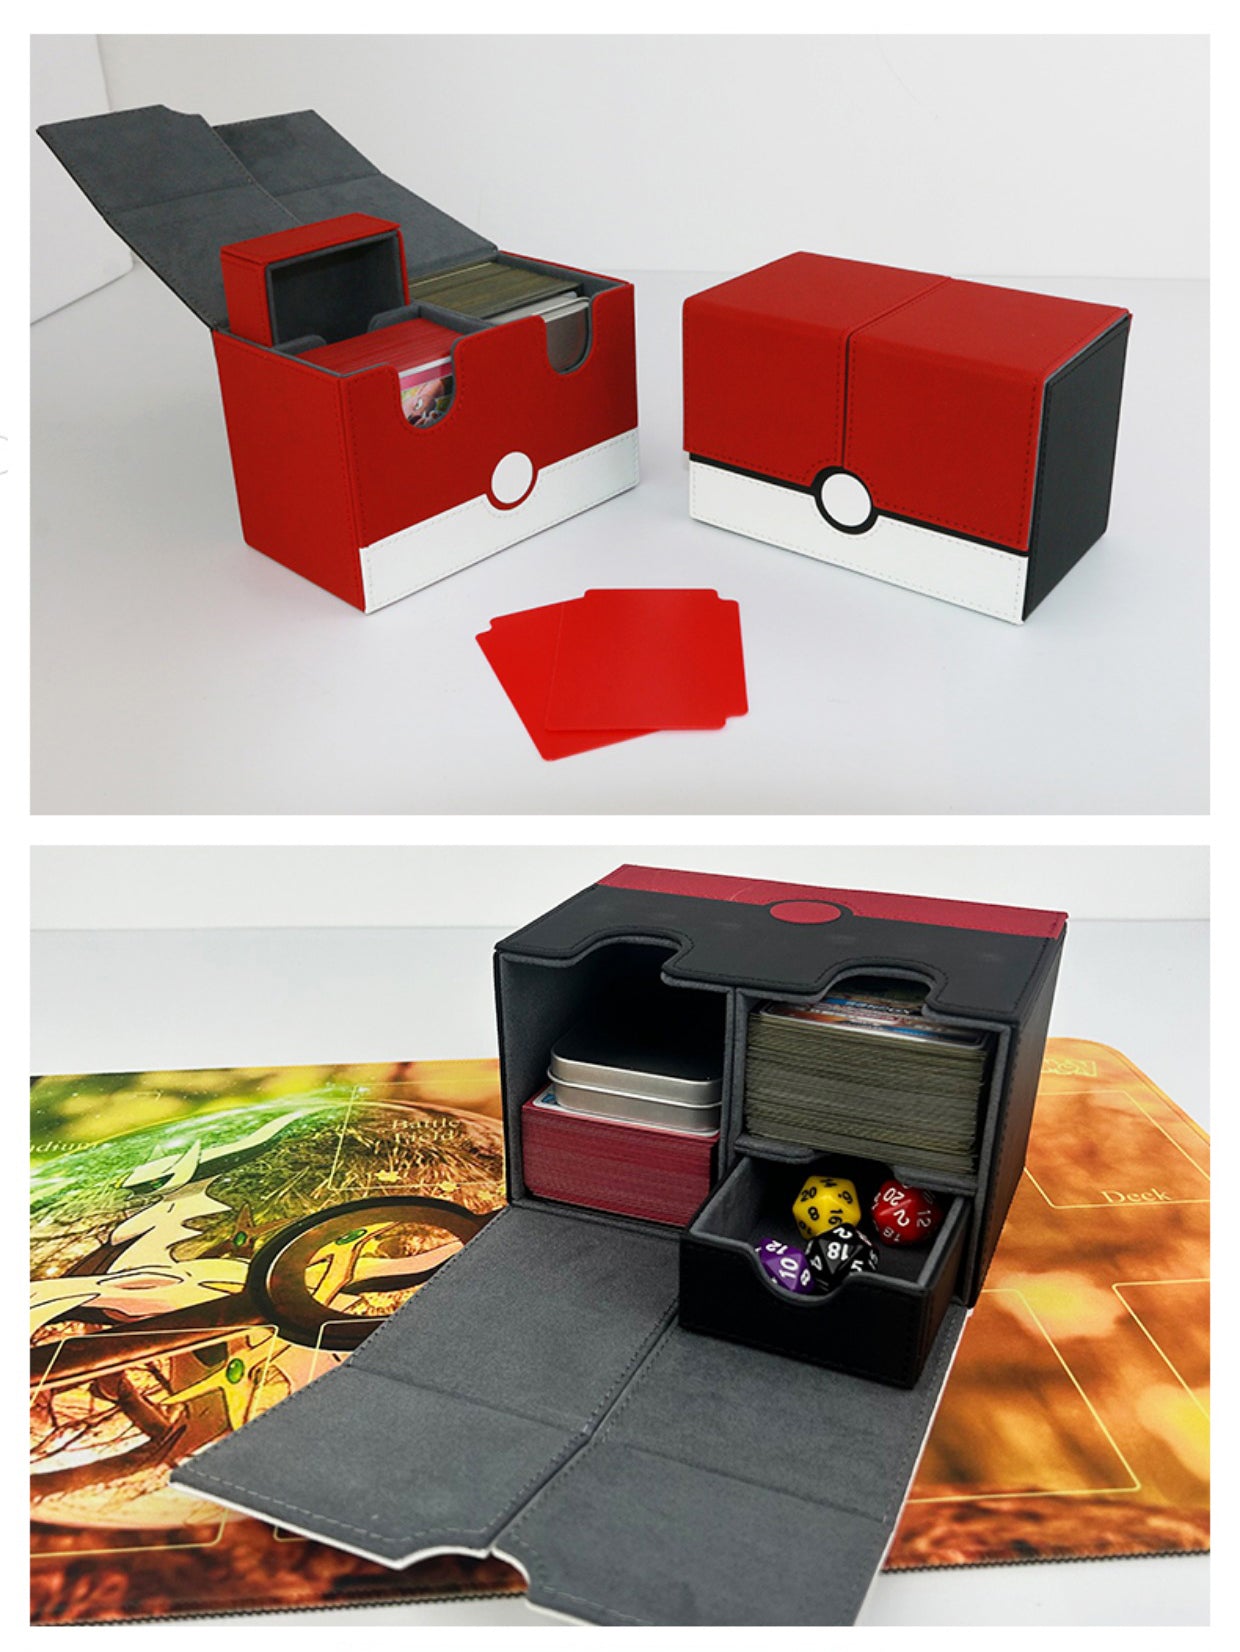 Poké Ball Alcove Flip Deck Box for Pokémon